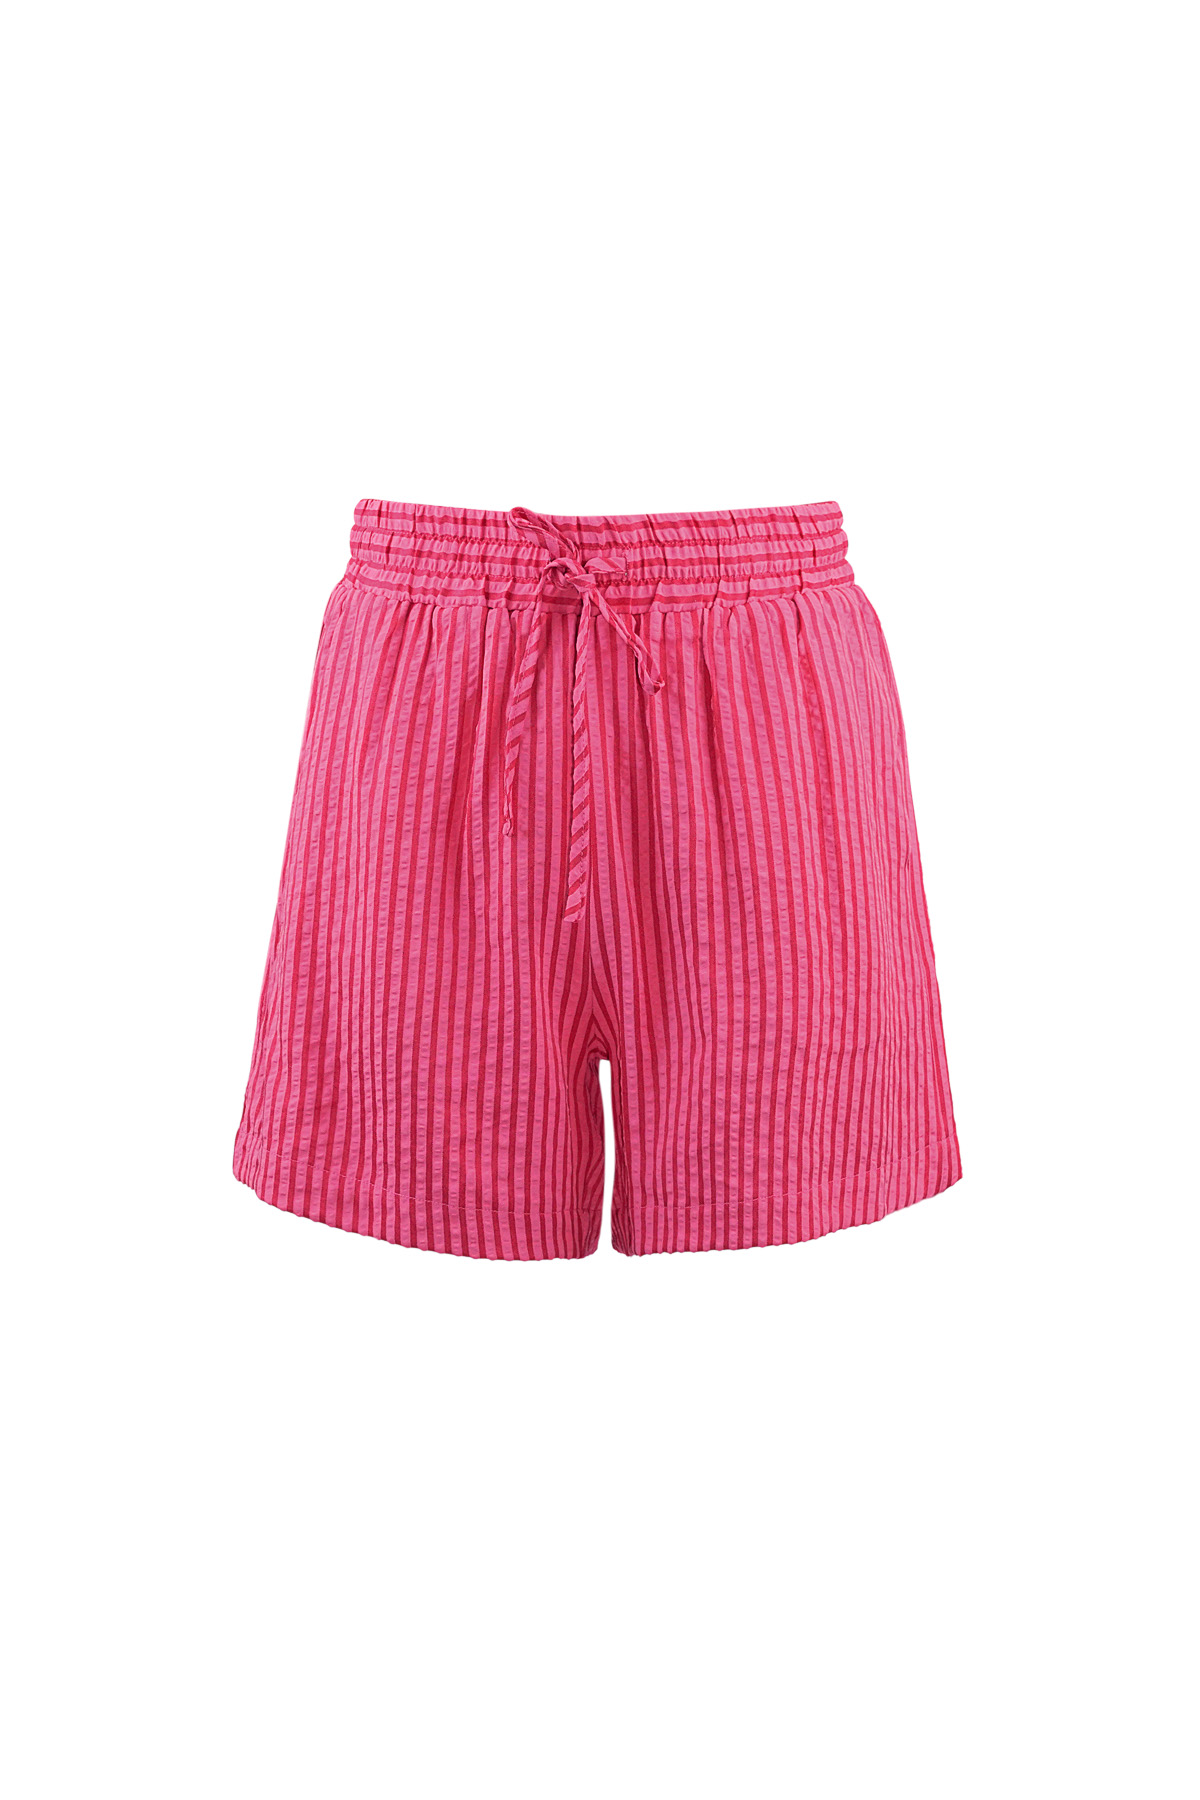 Gestreifte Shorts – rot-rosa